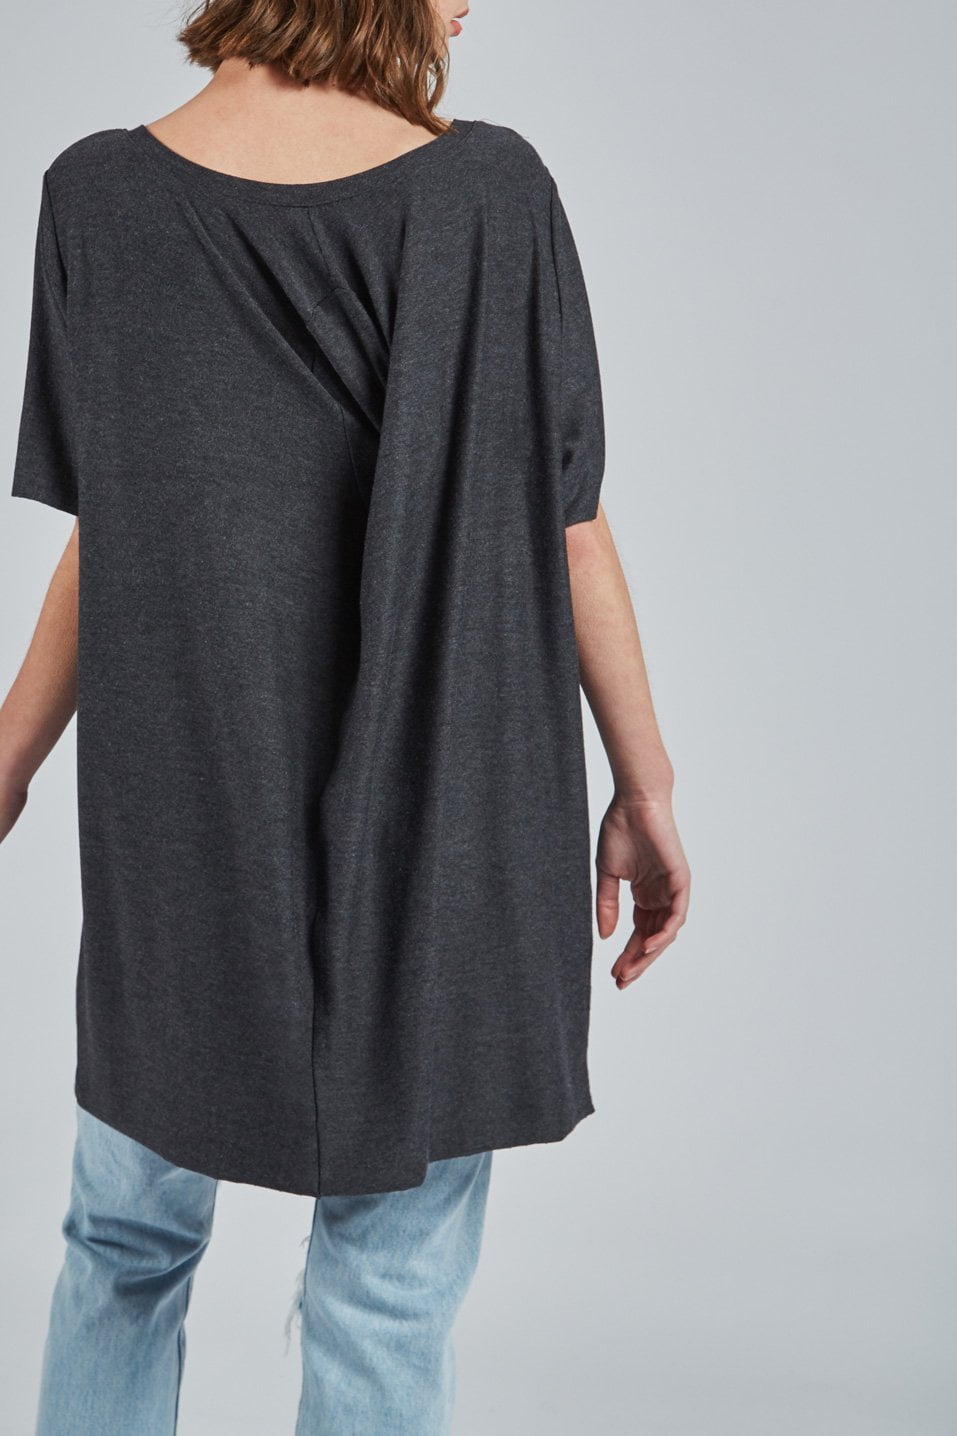 Women's Wolf Grey 4-Sleeve Shirt - Uztzu Clothing - Shop Super 4 in 1 T-shirts, Pants and hoodies online!